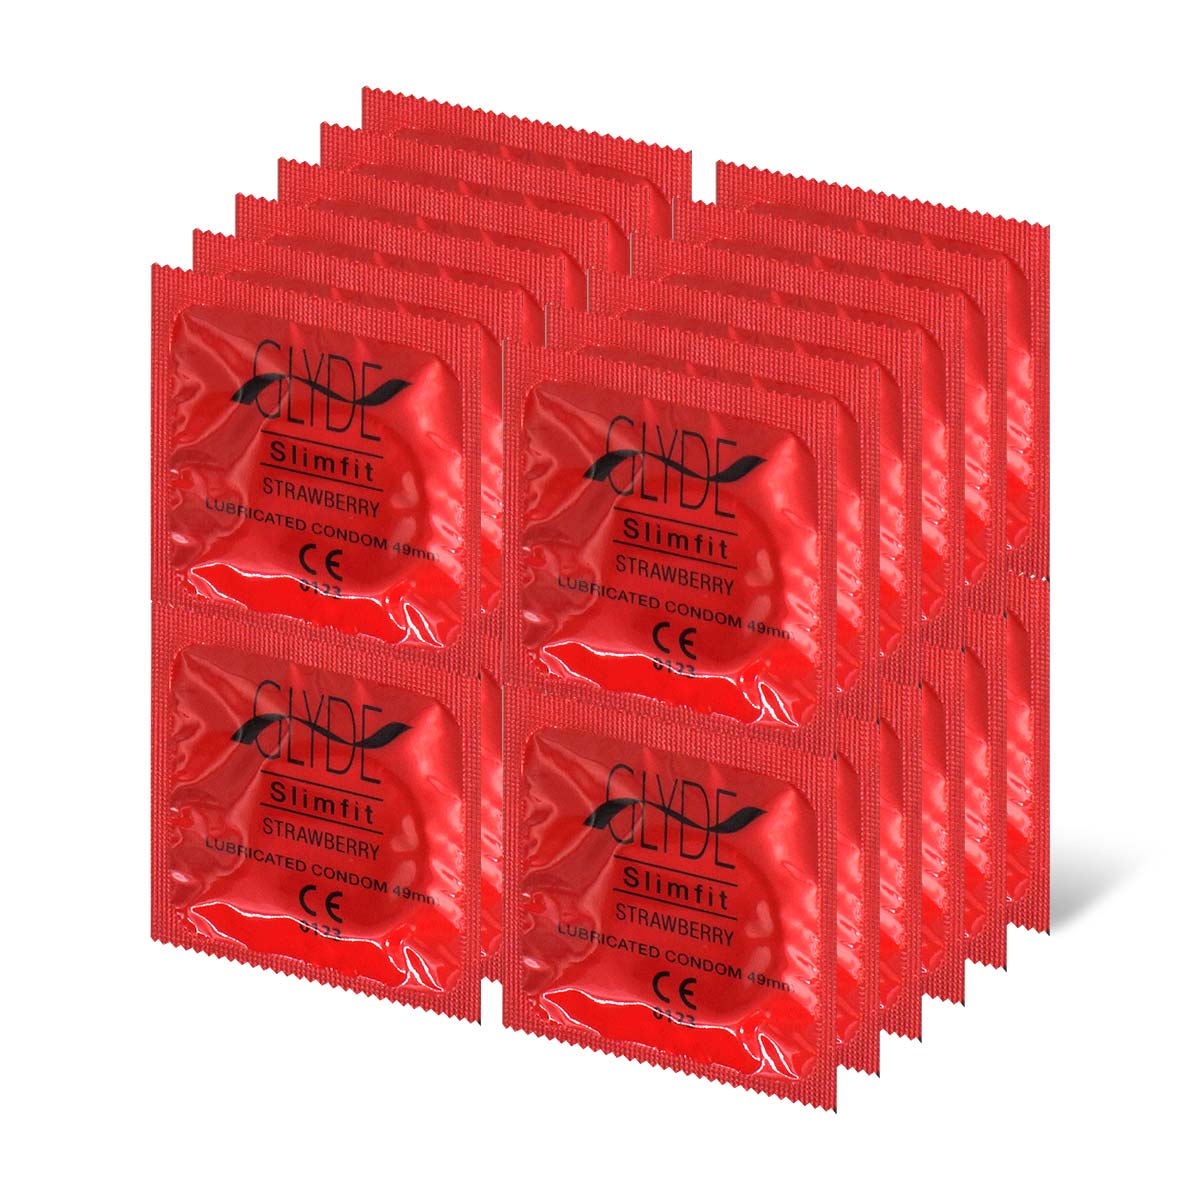 Glyde Vegan Condom Slimfit Strawberry 49mm 24's Pack Latex Condom-p_1